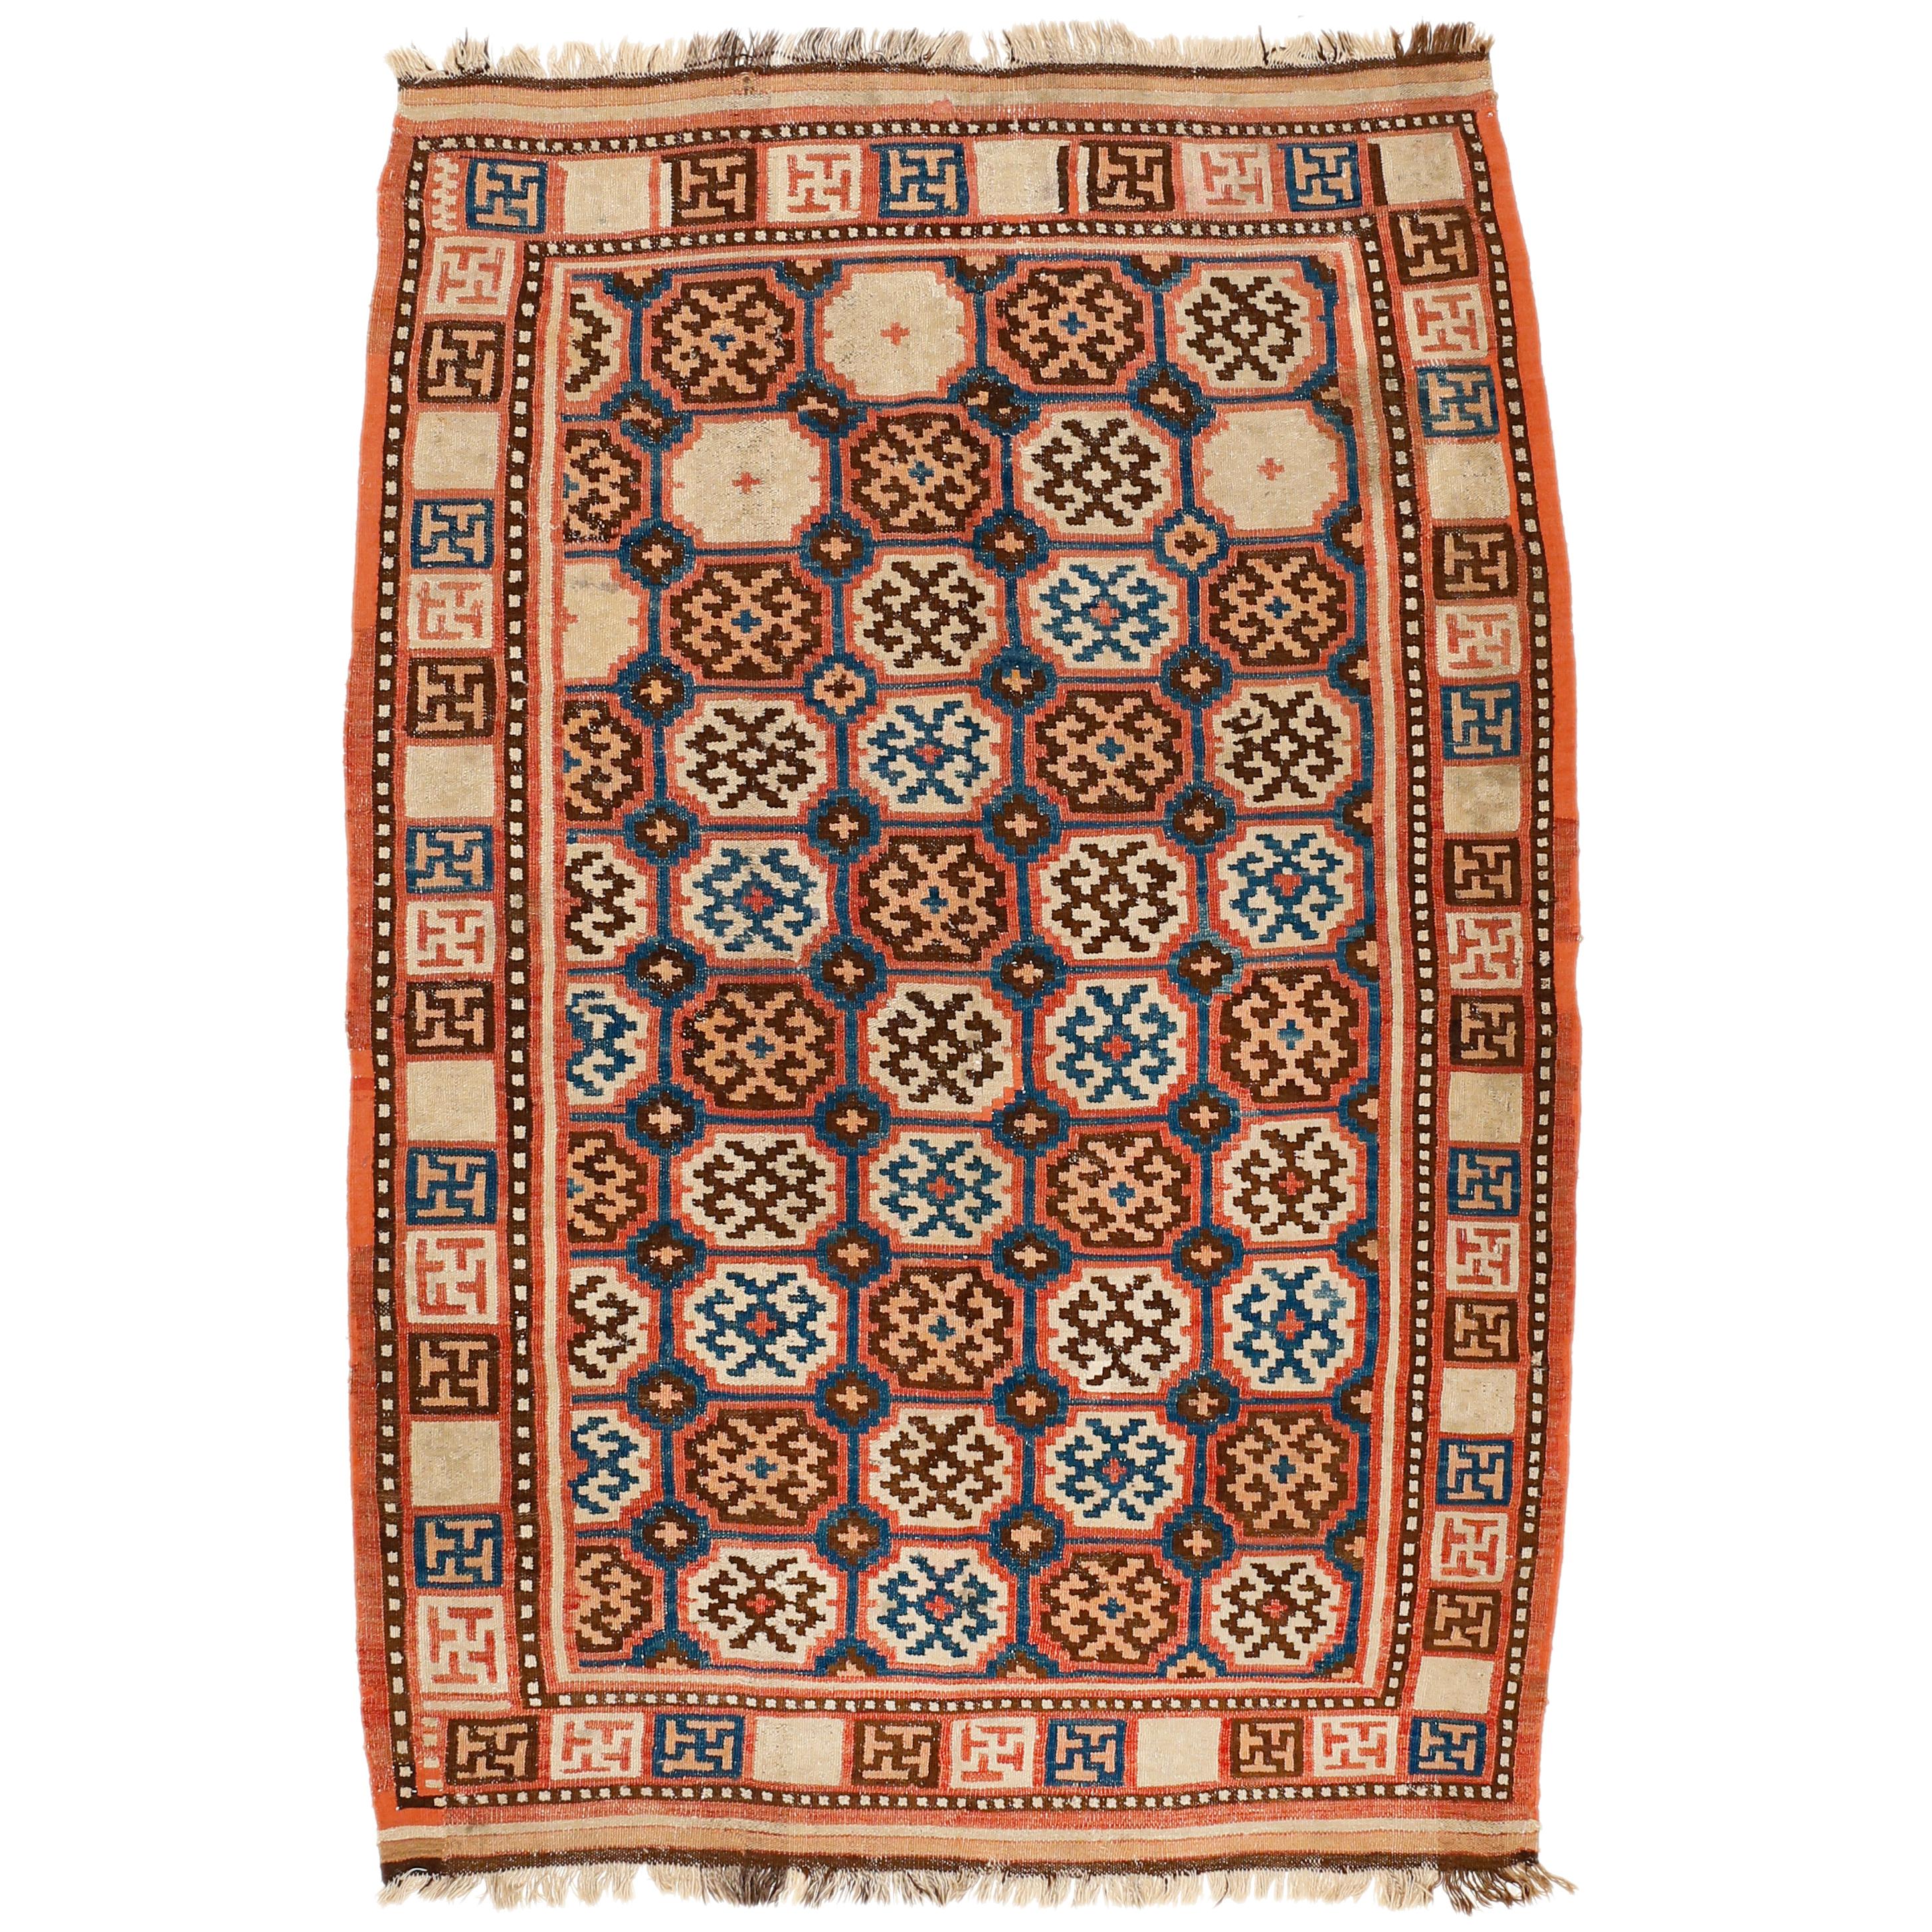 Wool Rare and Unusual Antique Khotan Kilim Rug For Sale